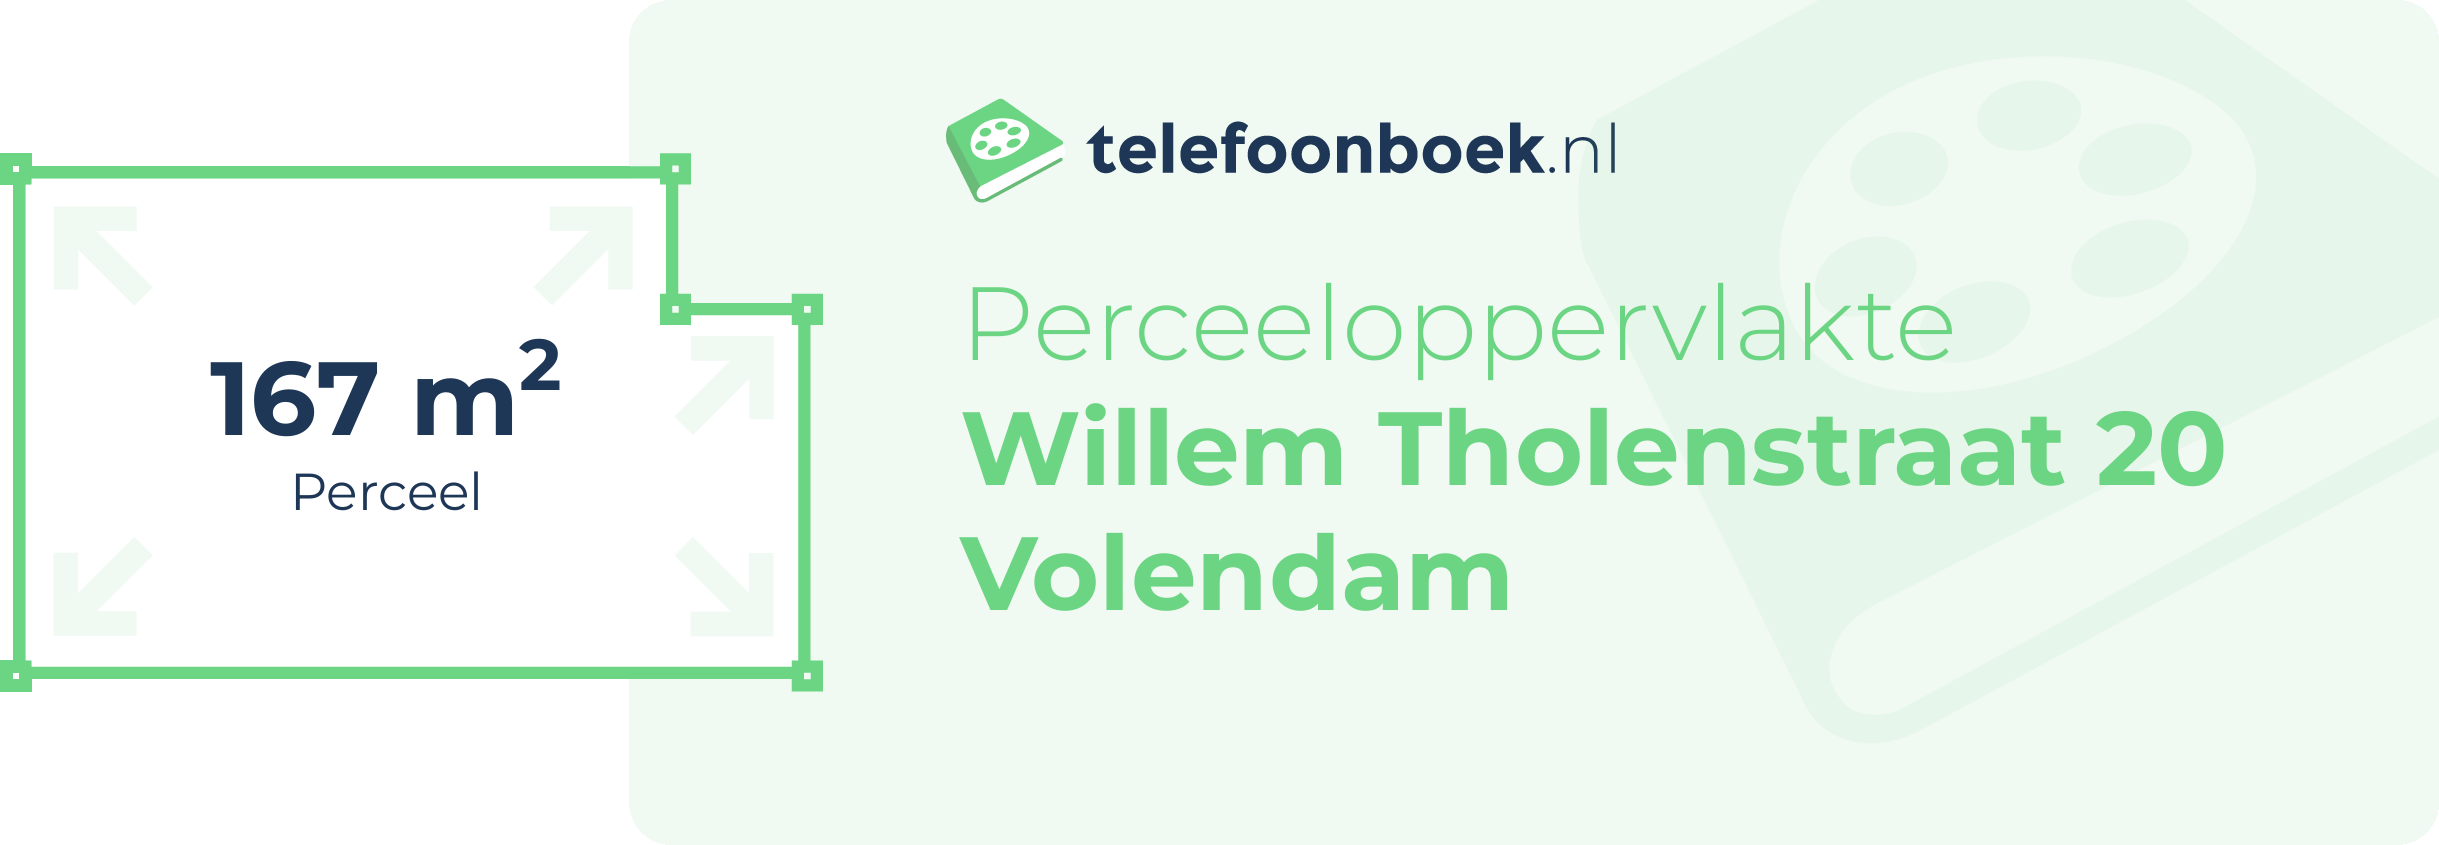 Perceeloppervlakte Willem Tholenstraat 20 Volendam